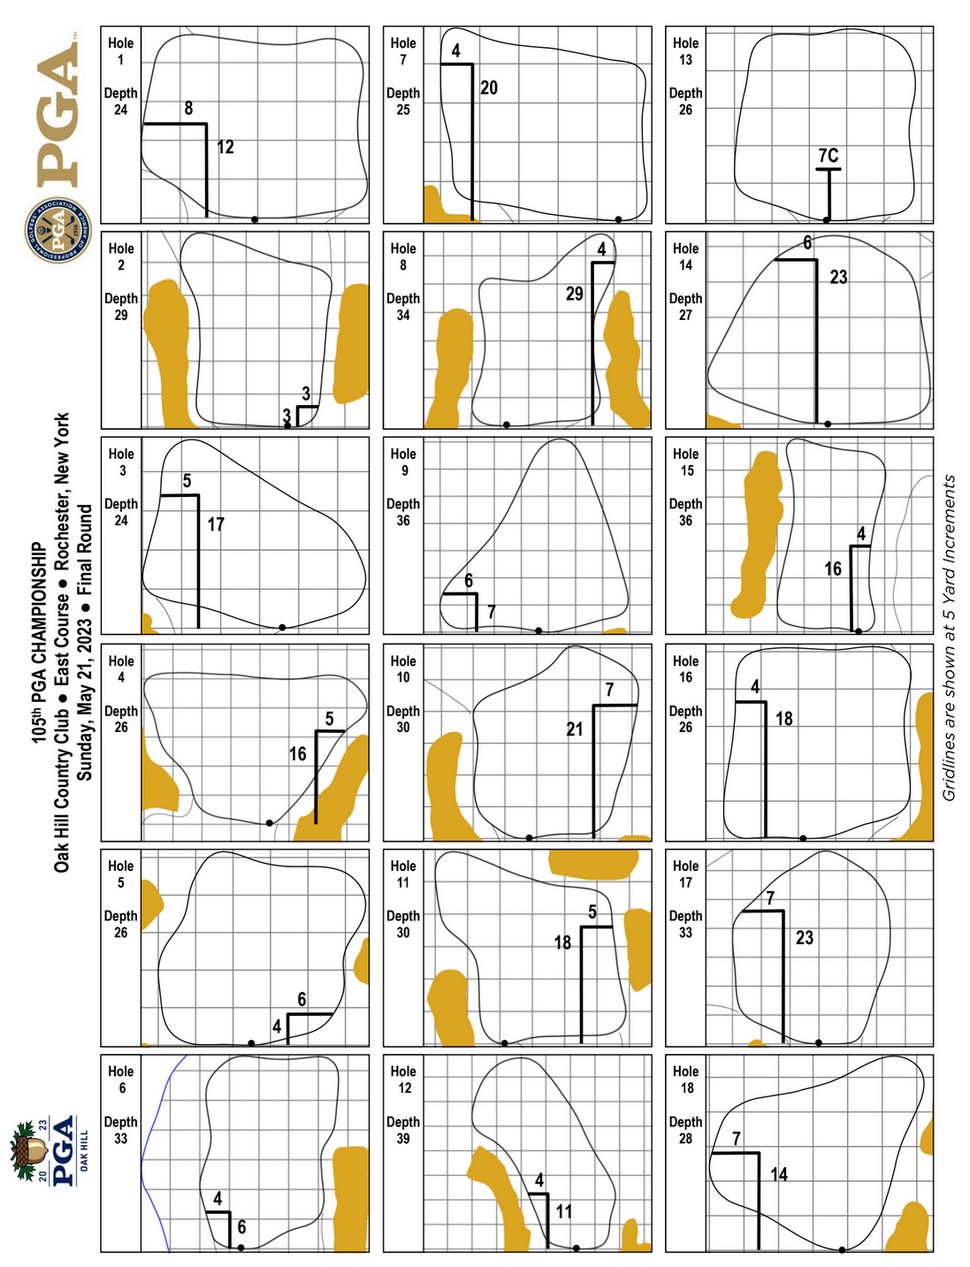 US PGA Championship pin locations - 4th Round